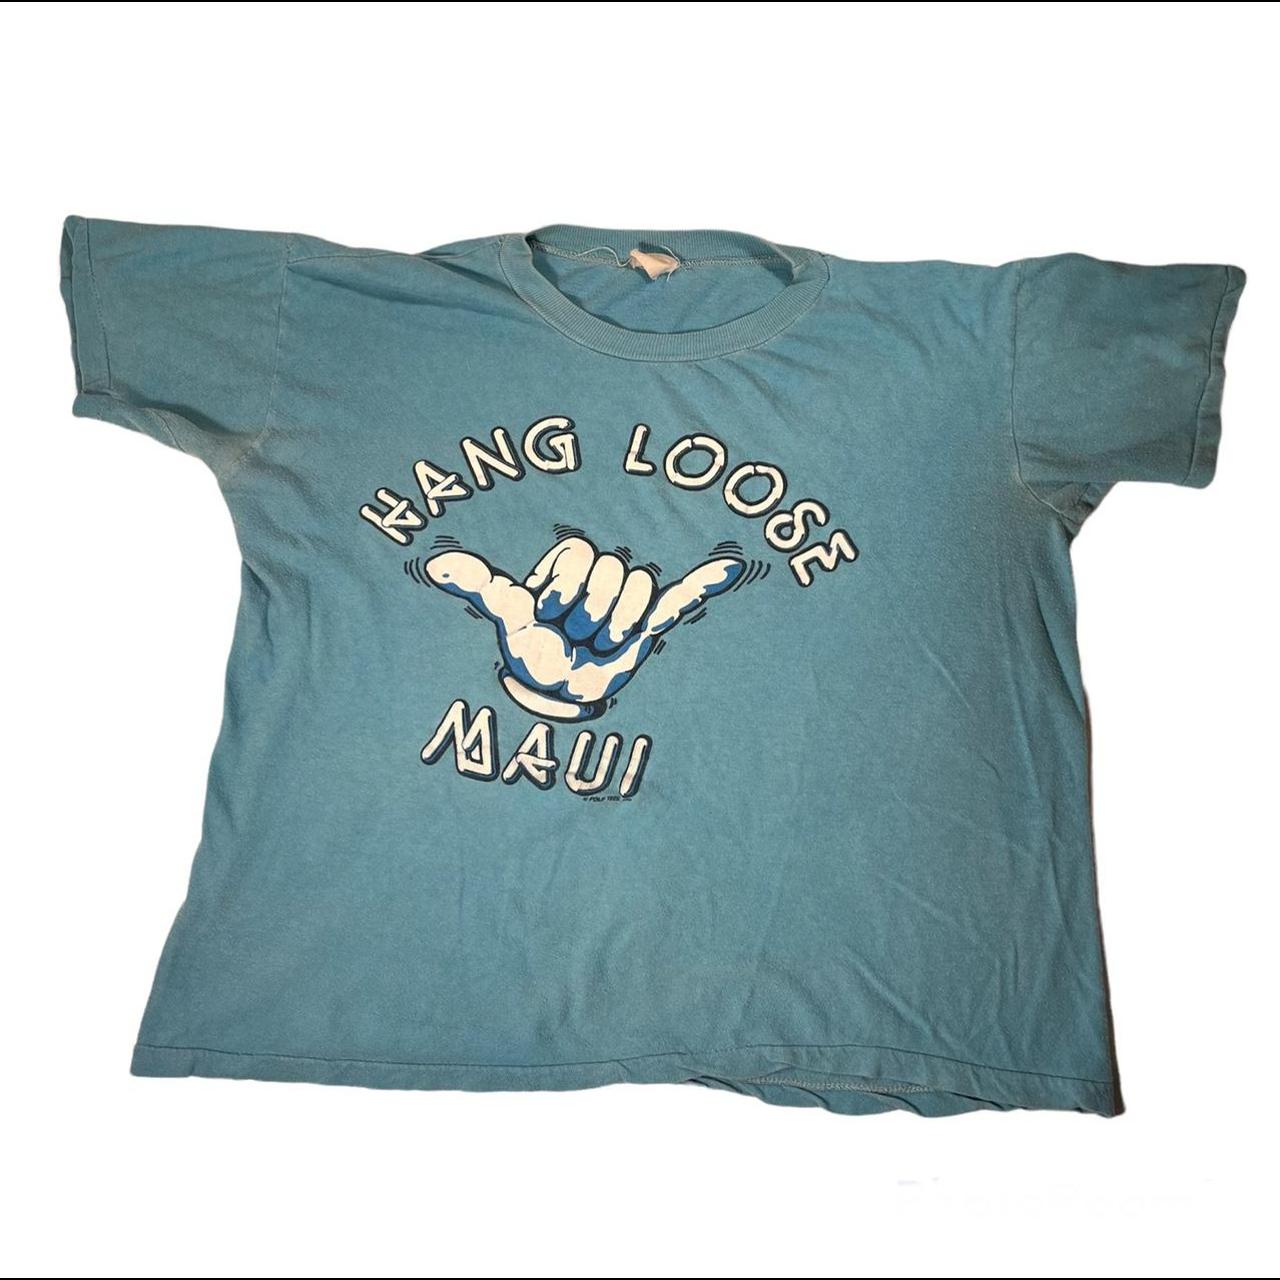 Vintage 80s hang loose maui surf T-Shirt size XL... - Depop